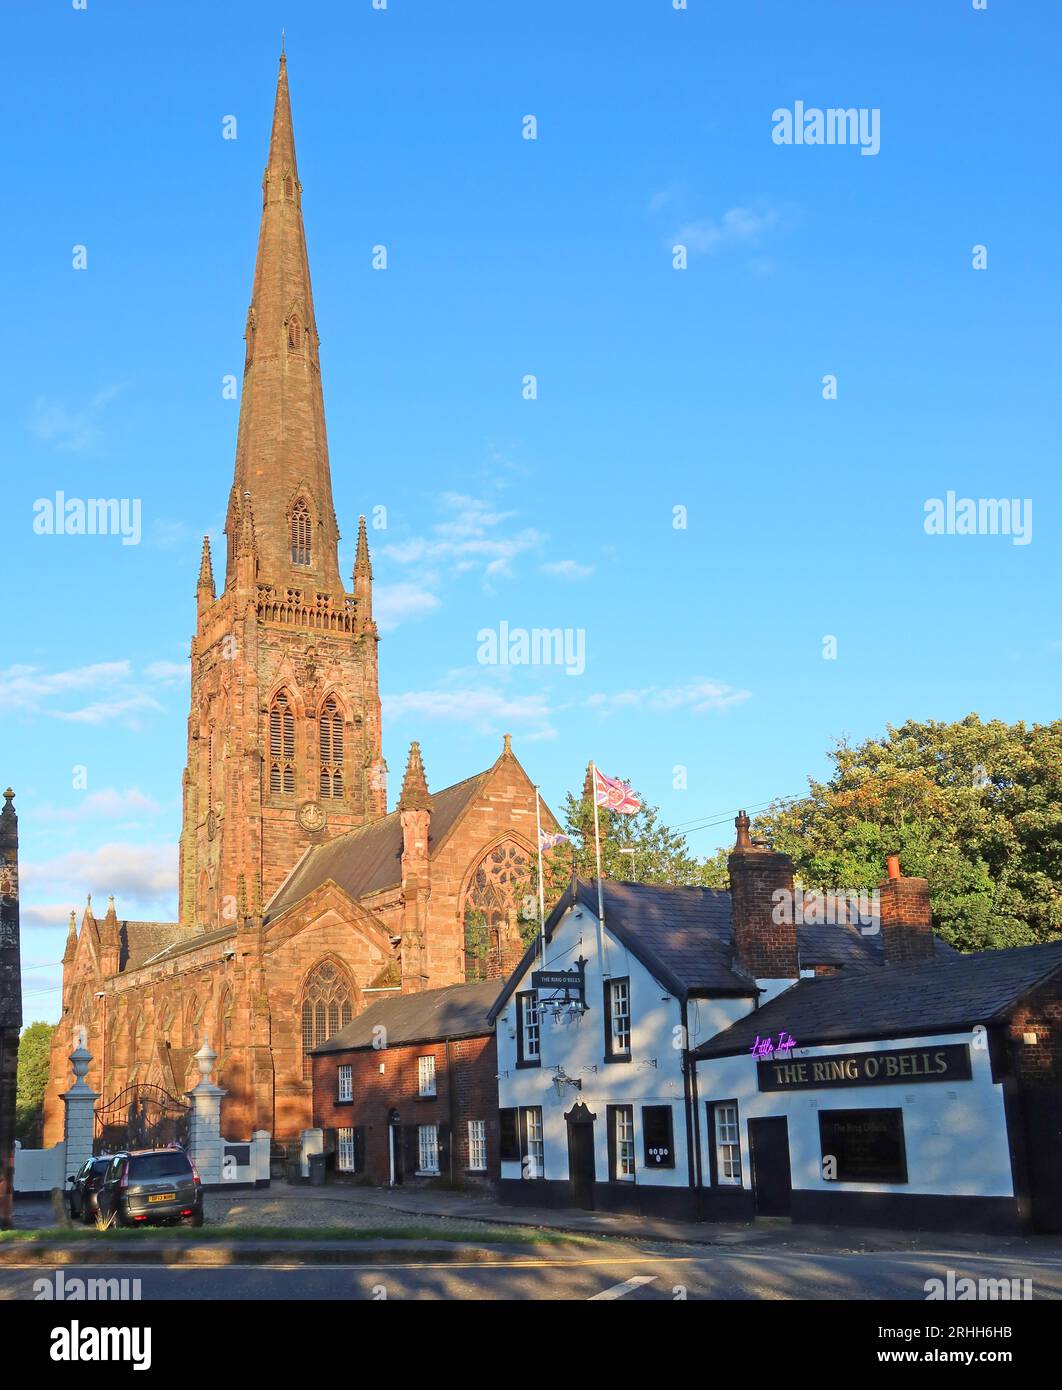 St Elphin's parish Church & Ring of Bells pub, evening sunset, Church Street, Warrington, Cheshire, England, UK, WA1 2TL Stock Photo